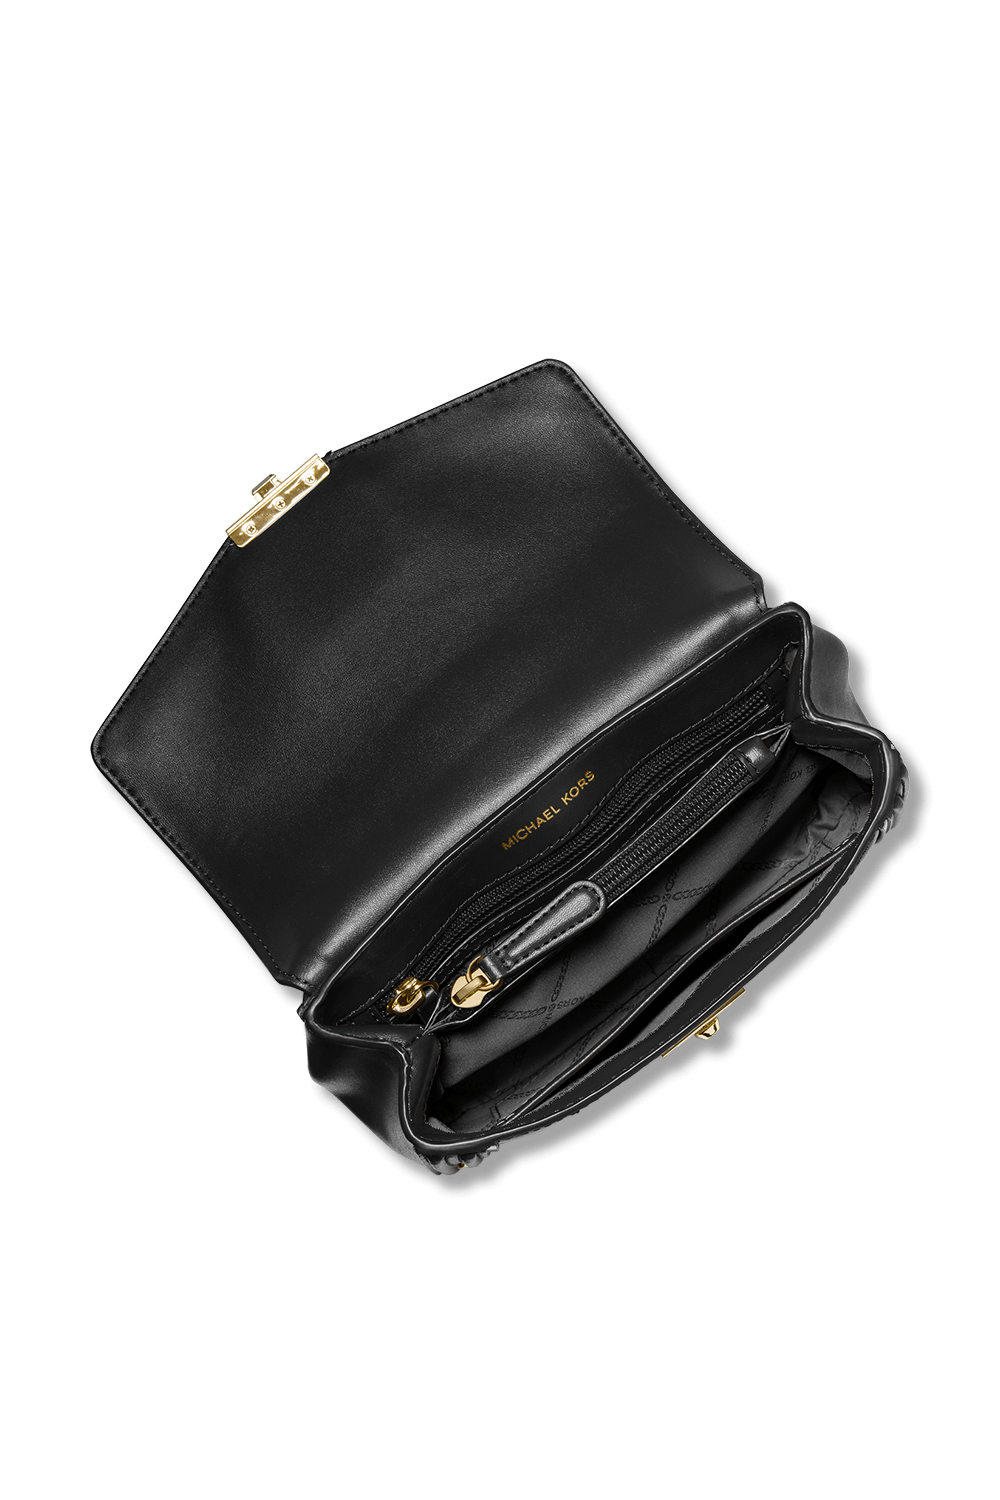 SoHo Small Studded Leather Shoulder Bag in Black MICHAEL KORS